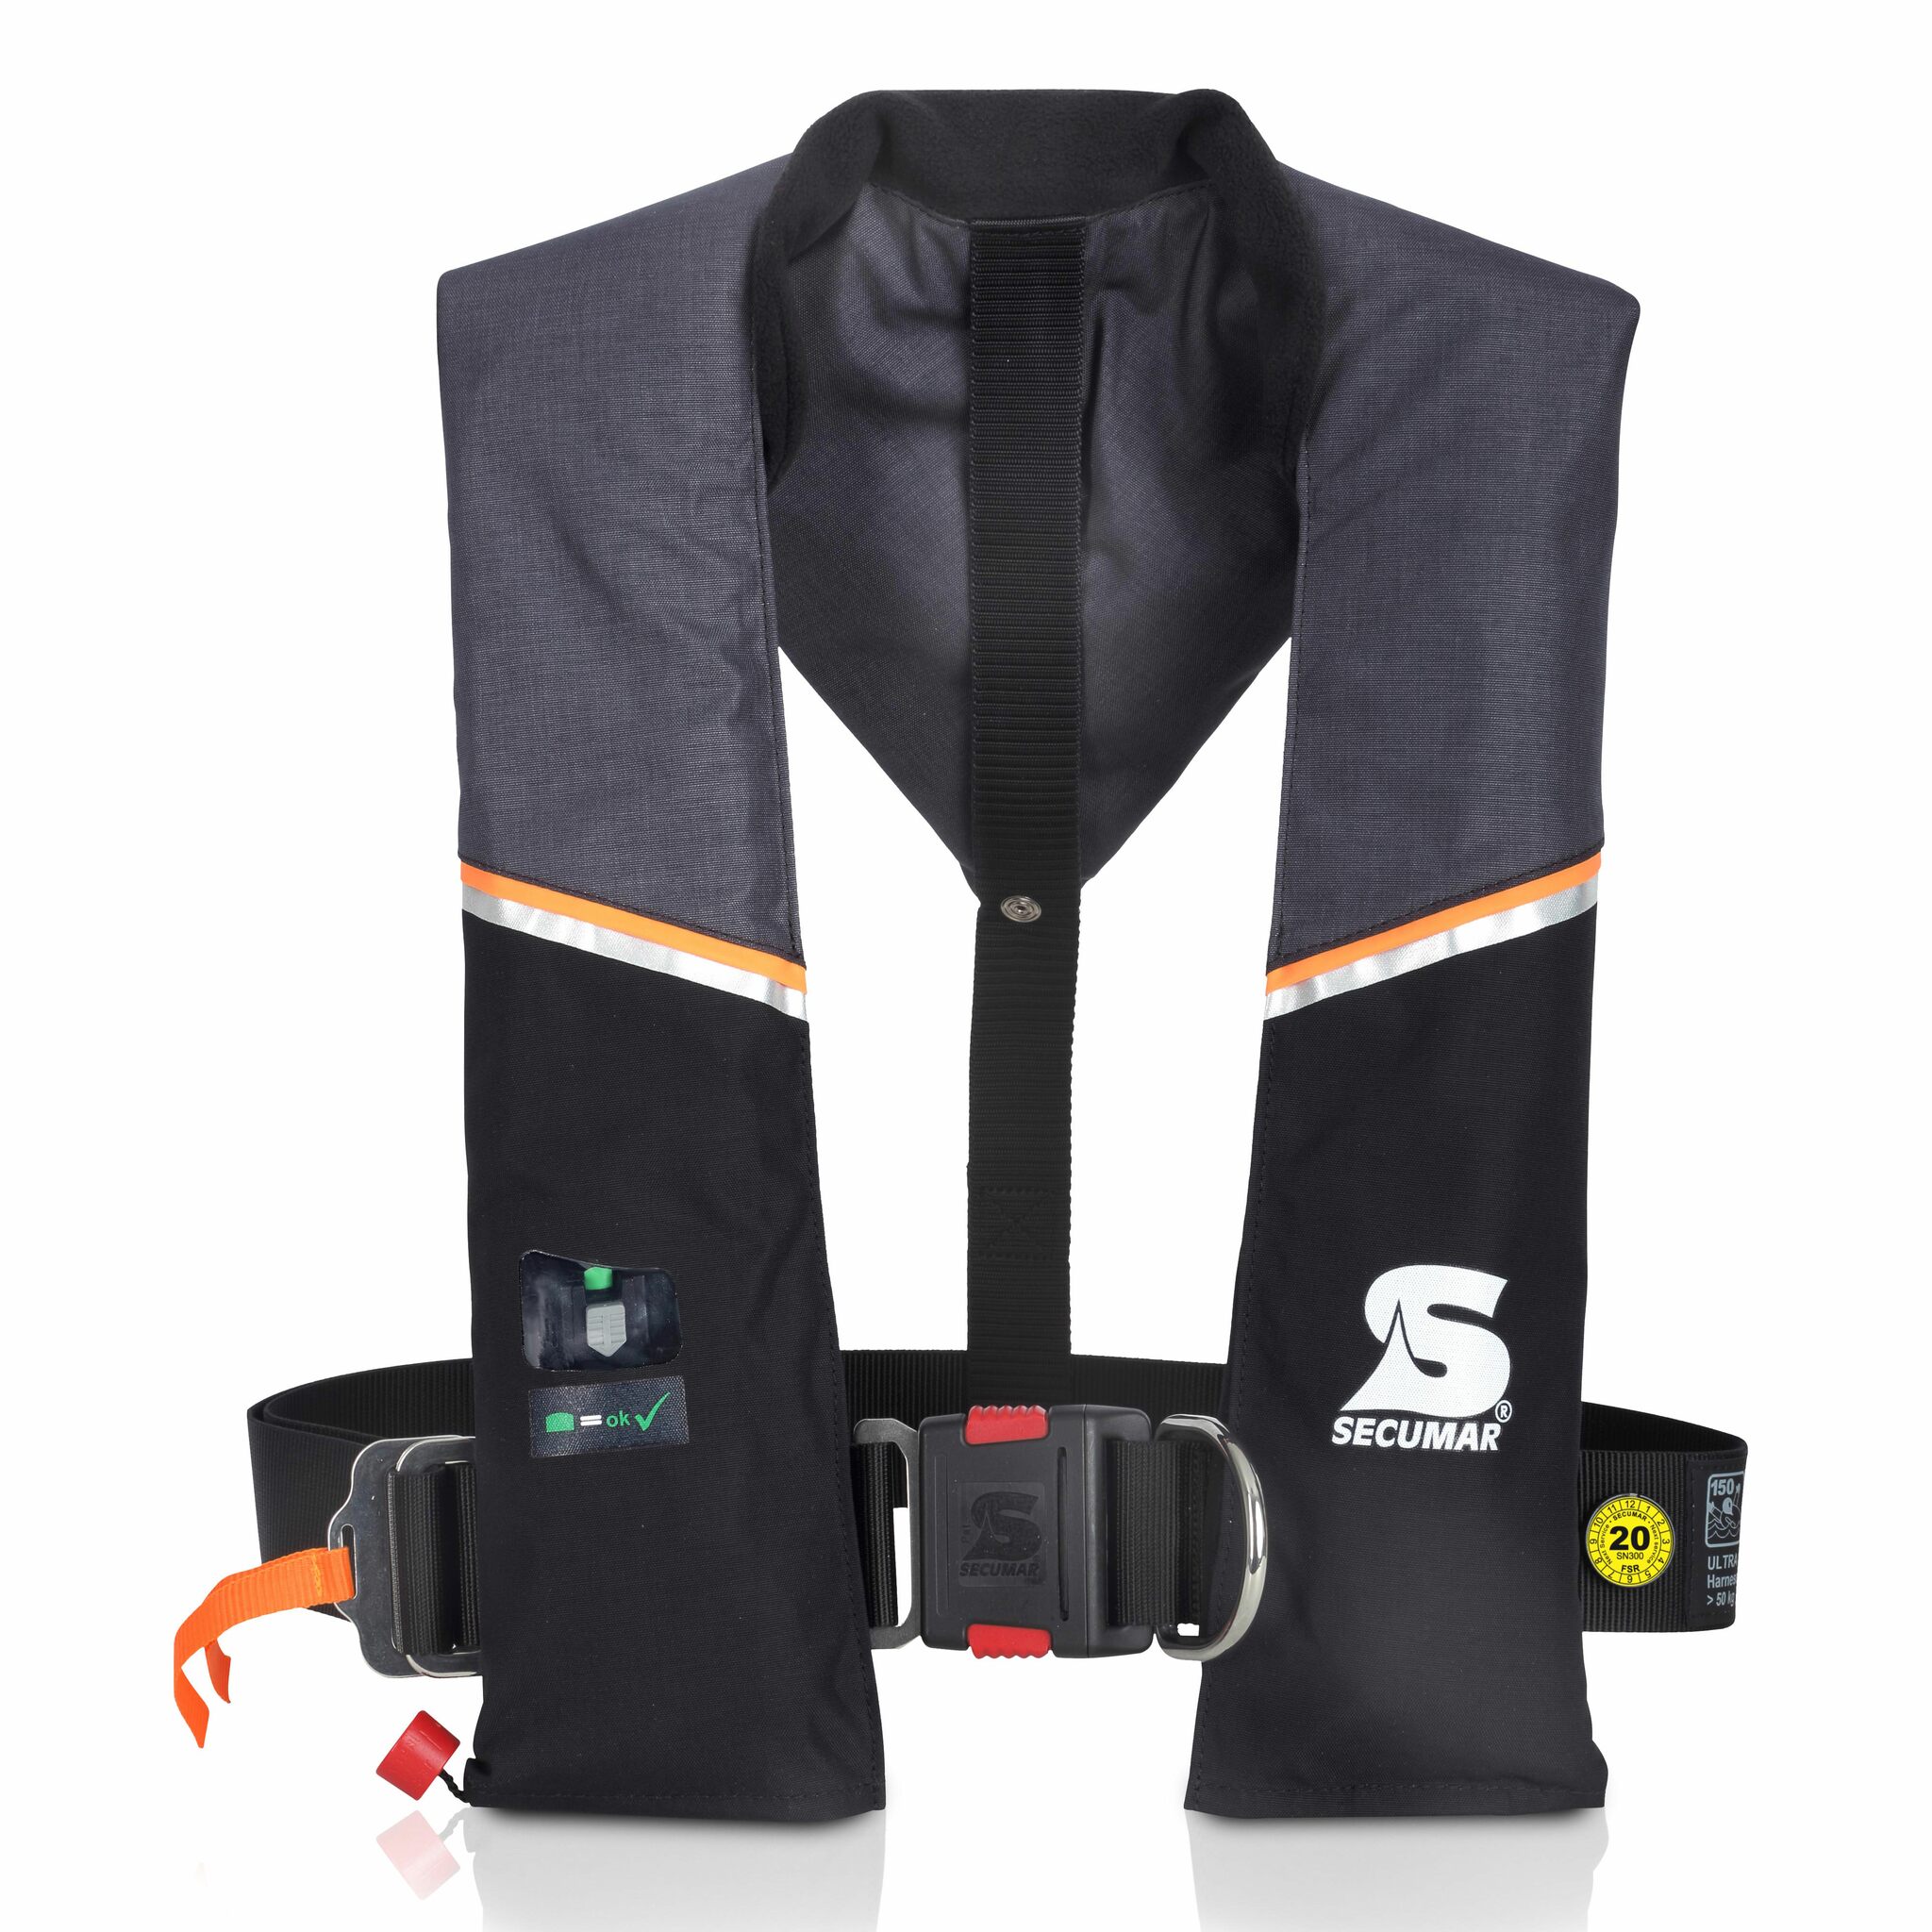 SECUMAR life jacket Ultra 170 with harness